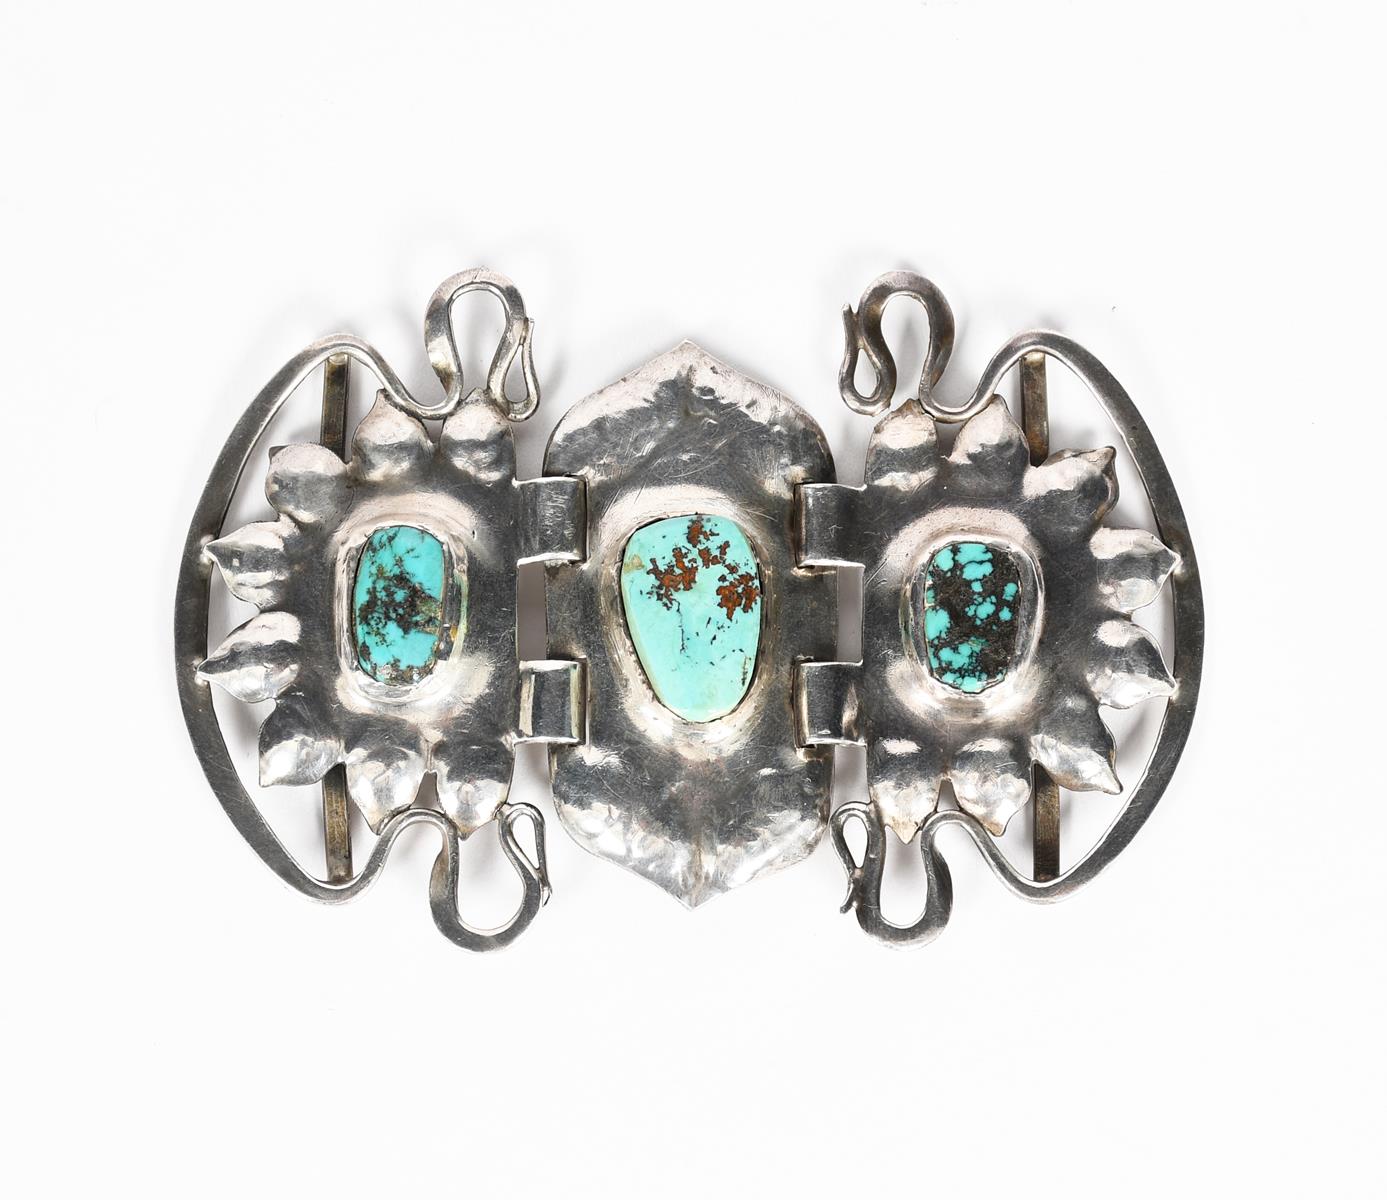 A Liberty & Co Cymric silver belt buckle designed by Oliver Baker, cast scrolling foliate form